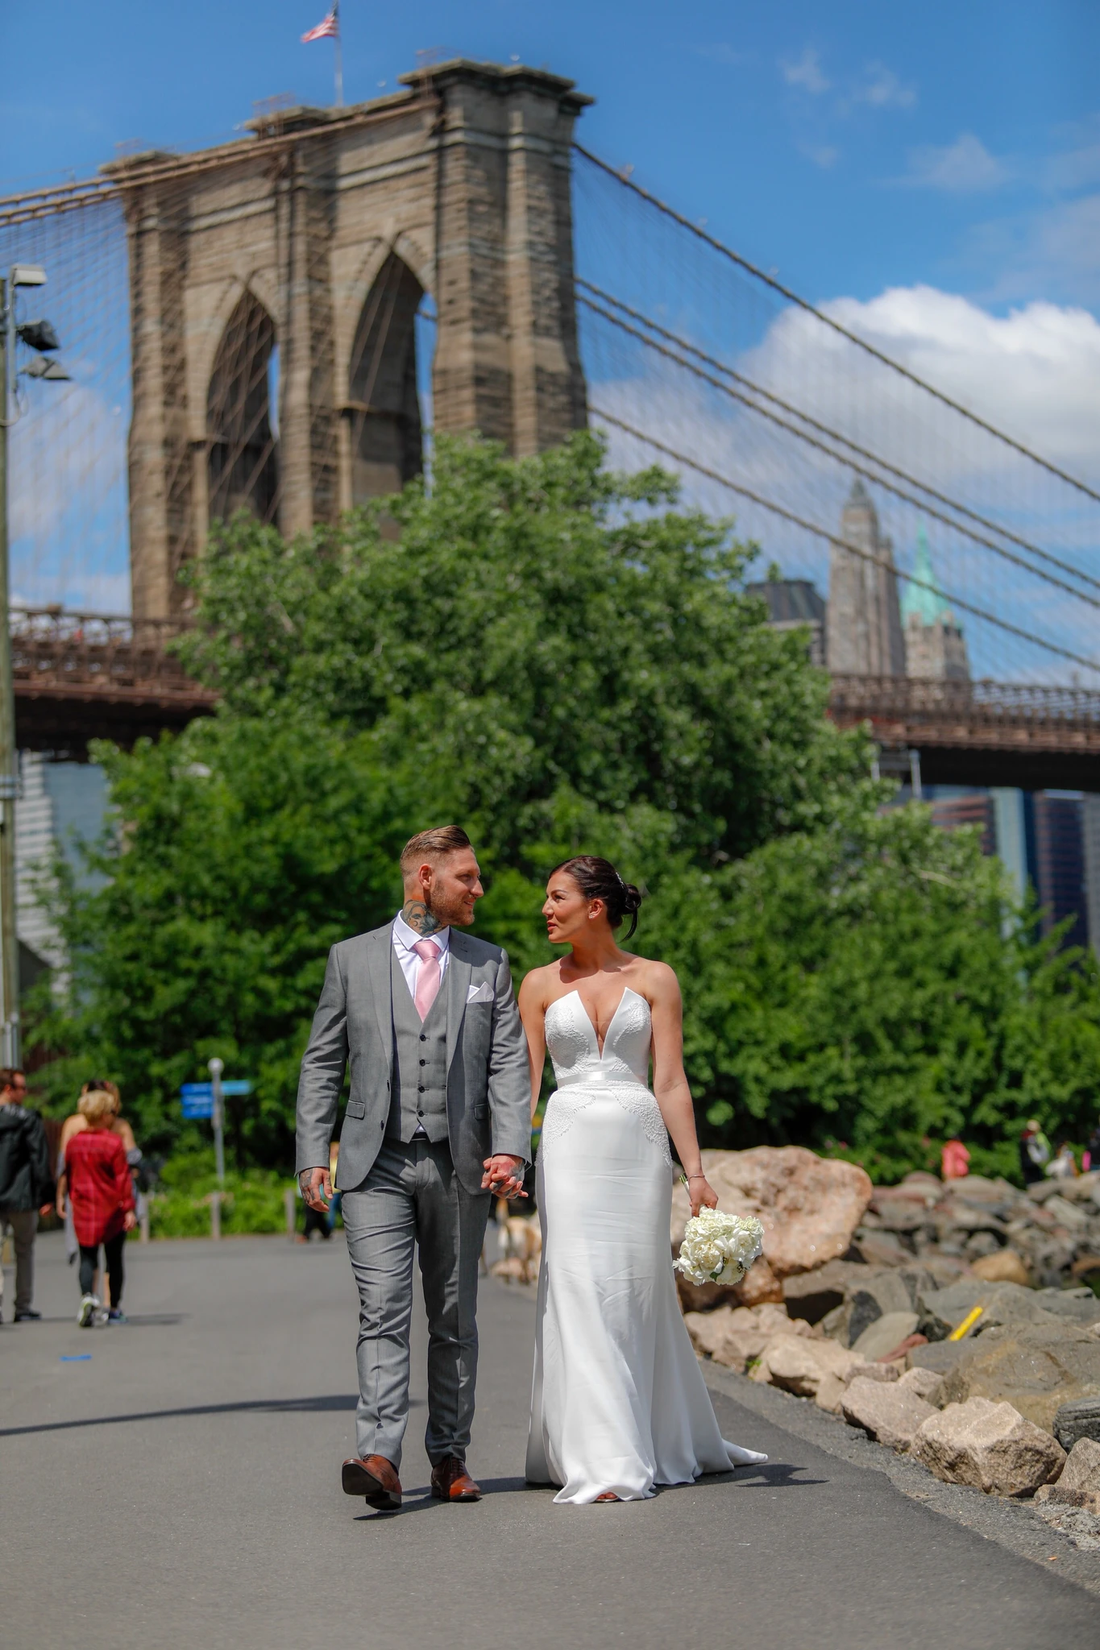 A Chic New York Wedding